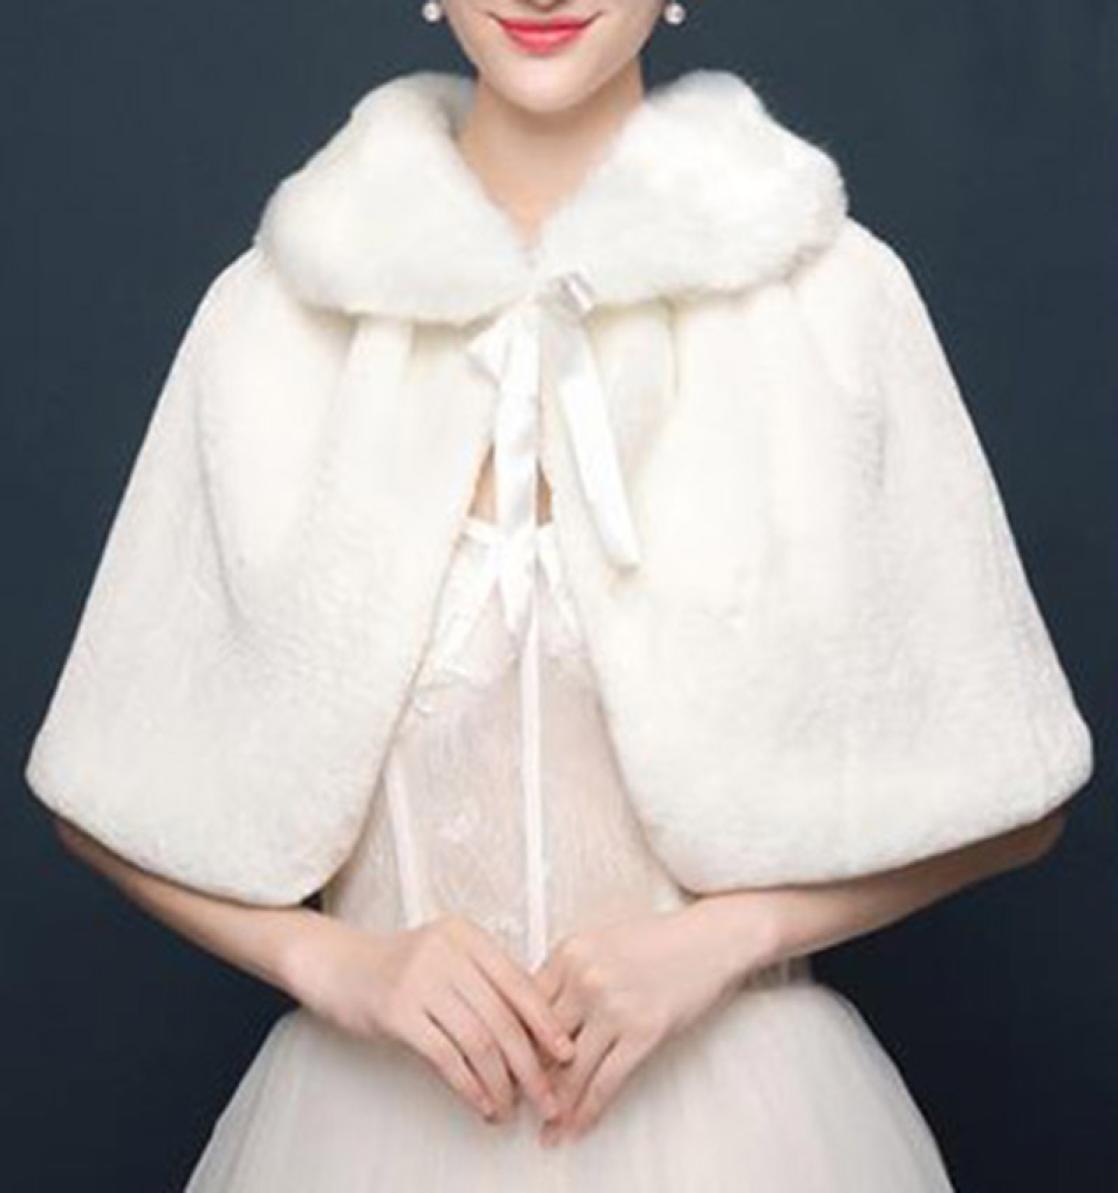 

2021 Bridal Winter Warm Cape Fur Shawl Cloak Wedding Outerwear Bolero Wrap Cape Stole Women Jacket Coat Shrug for Party Dresses BD1012423, White